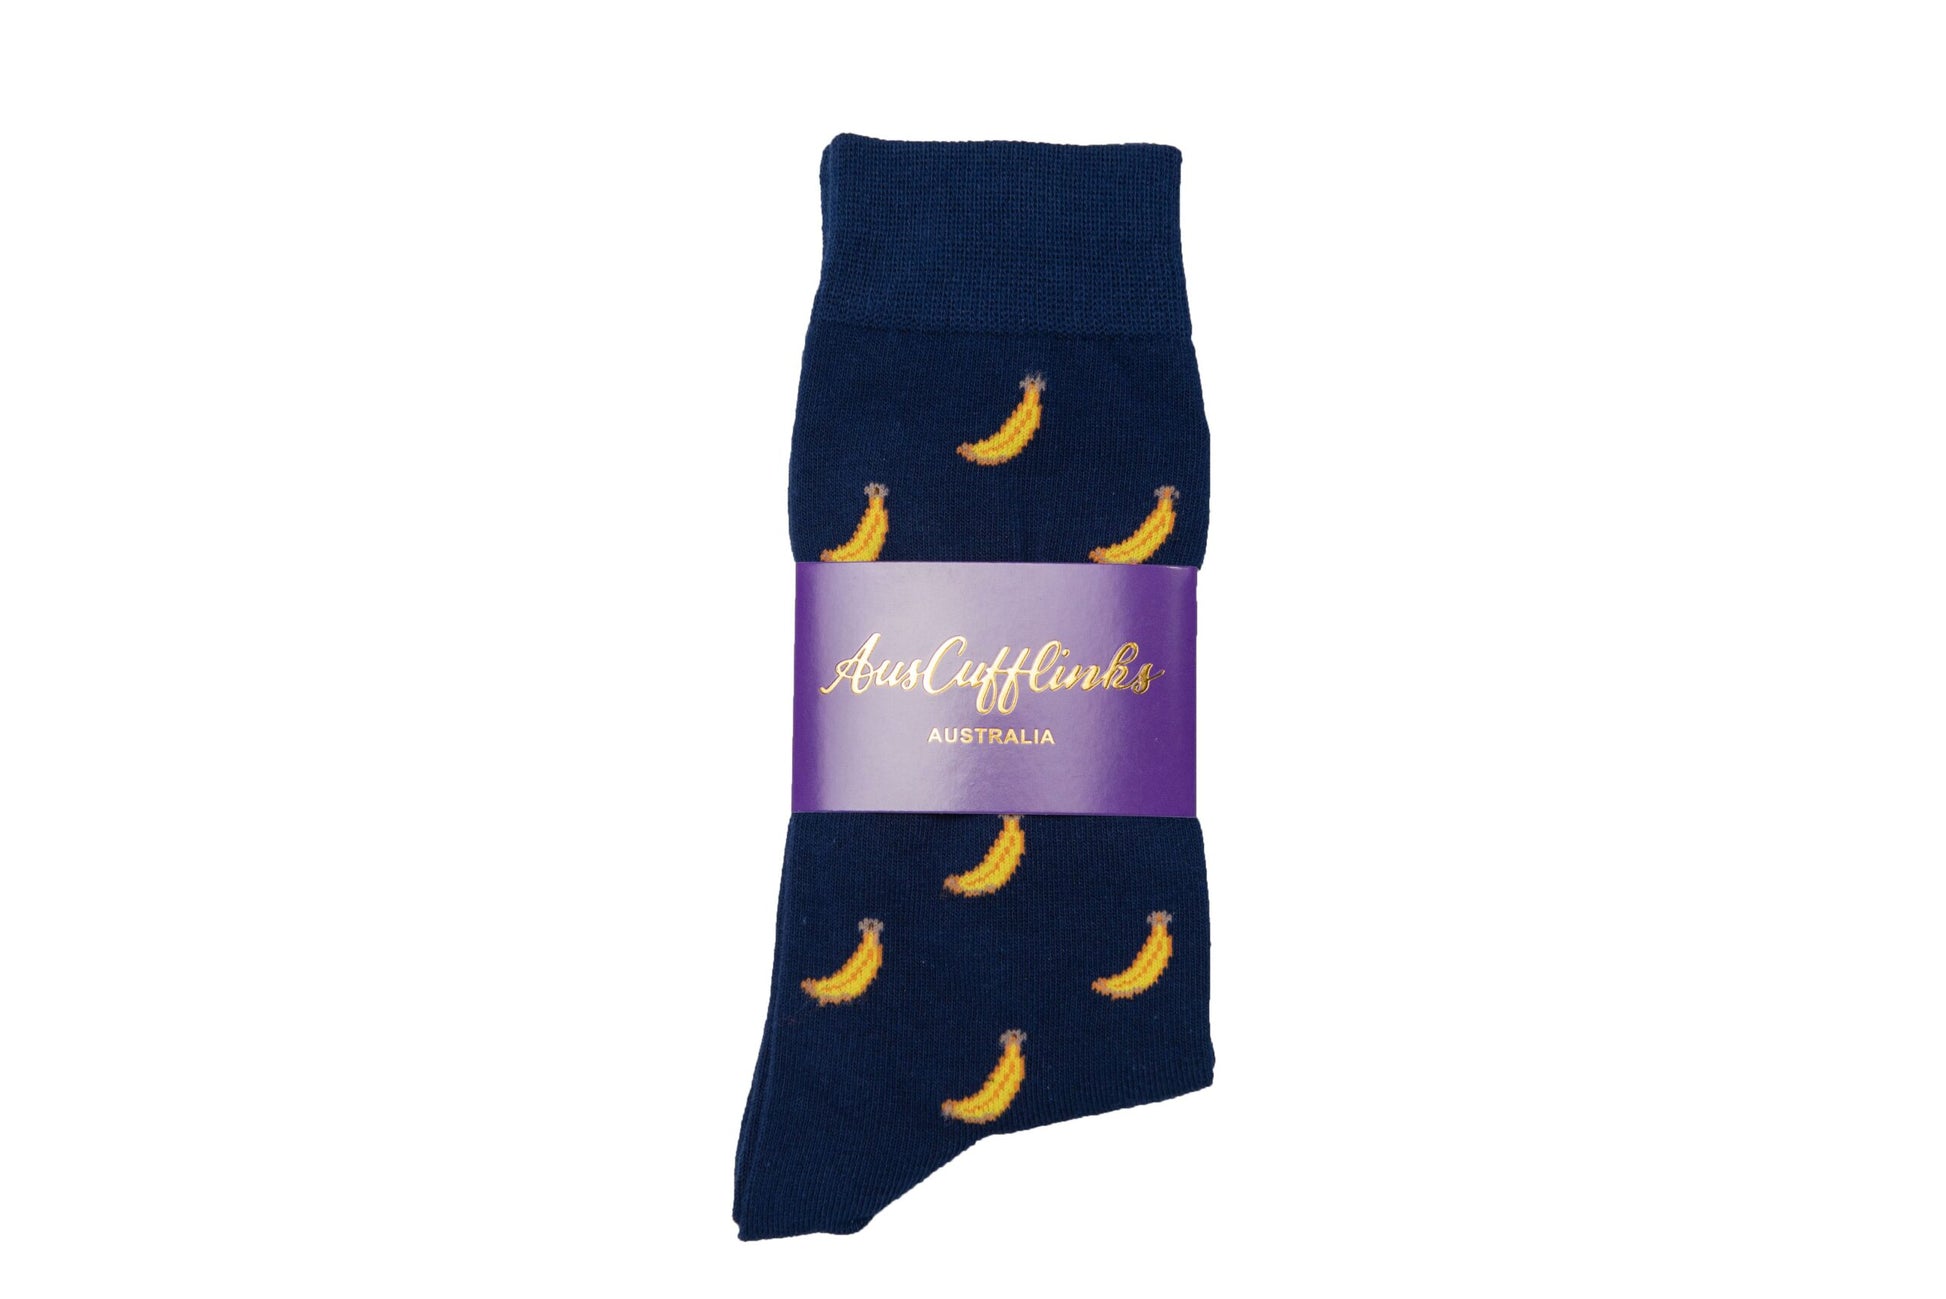 A Banana Socks